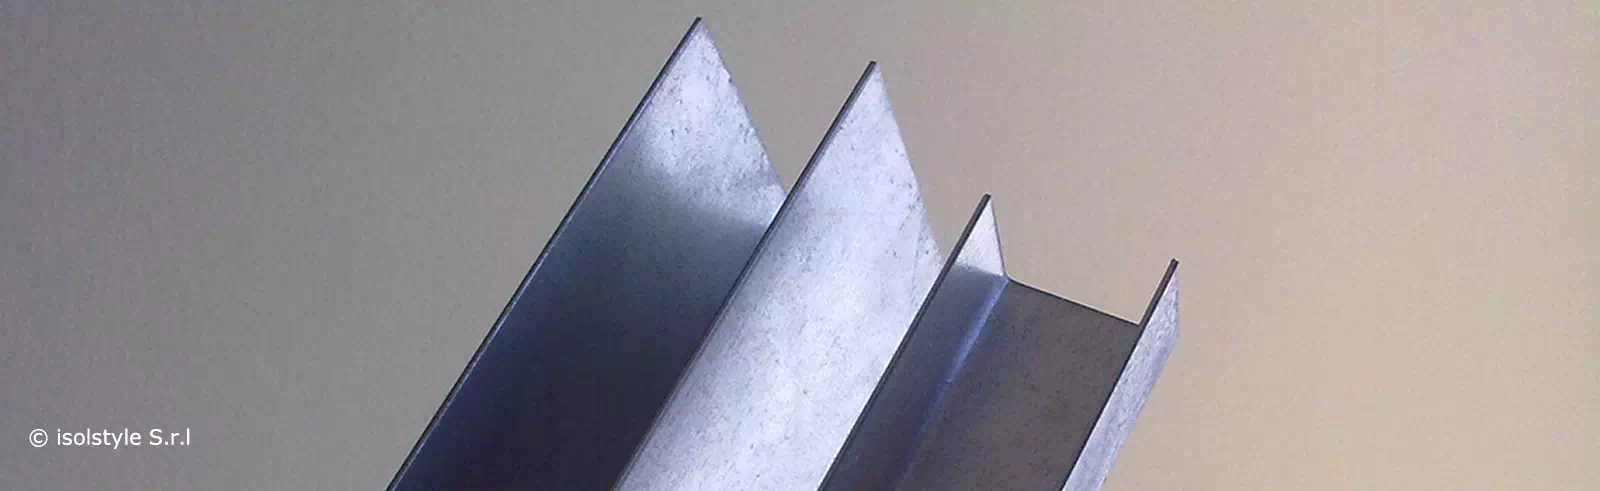 Guide superiore ed inferiore in acciaio zincato